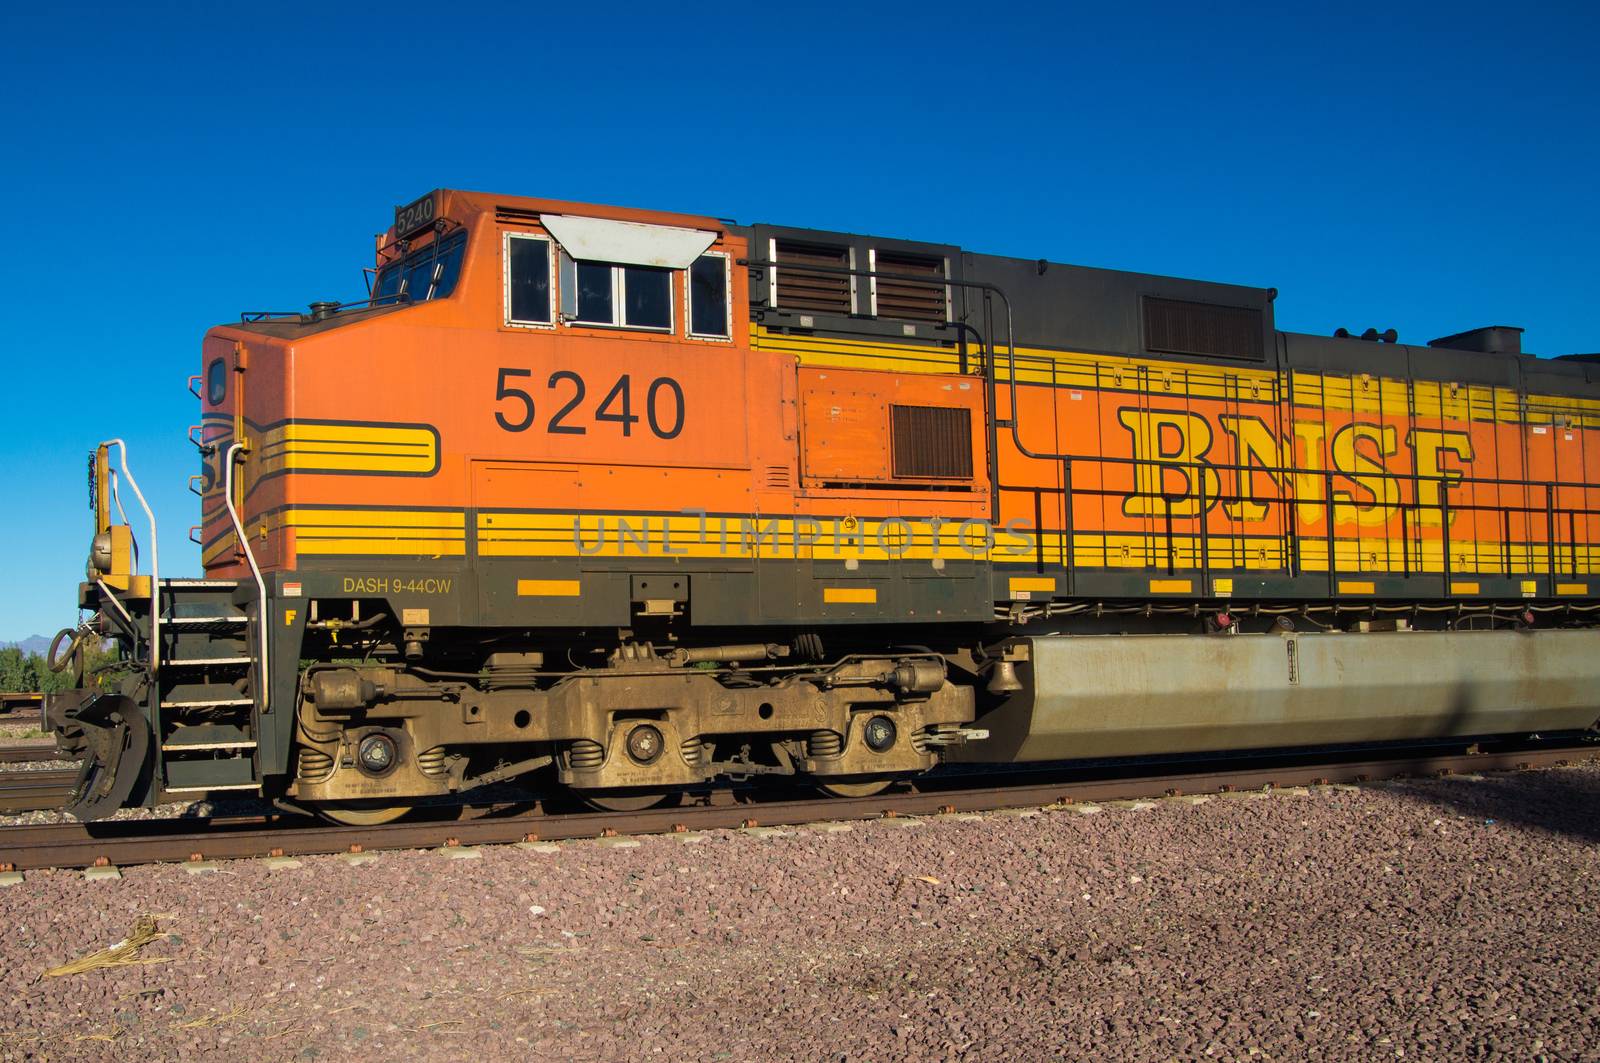 Distinctive orange and yellow Burlington Northern Santa Fe Locomotive freight train No. 5240 on the tracks at the town of Needles, California. Photo taken in February 2013.